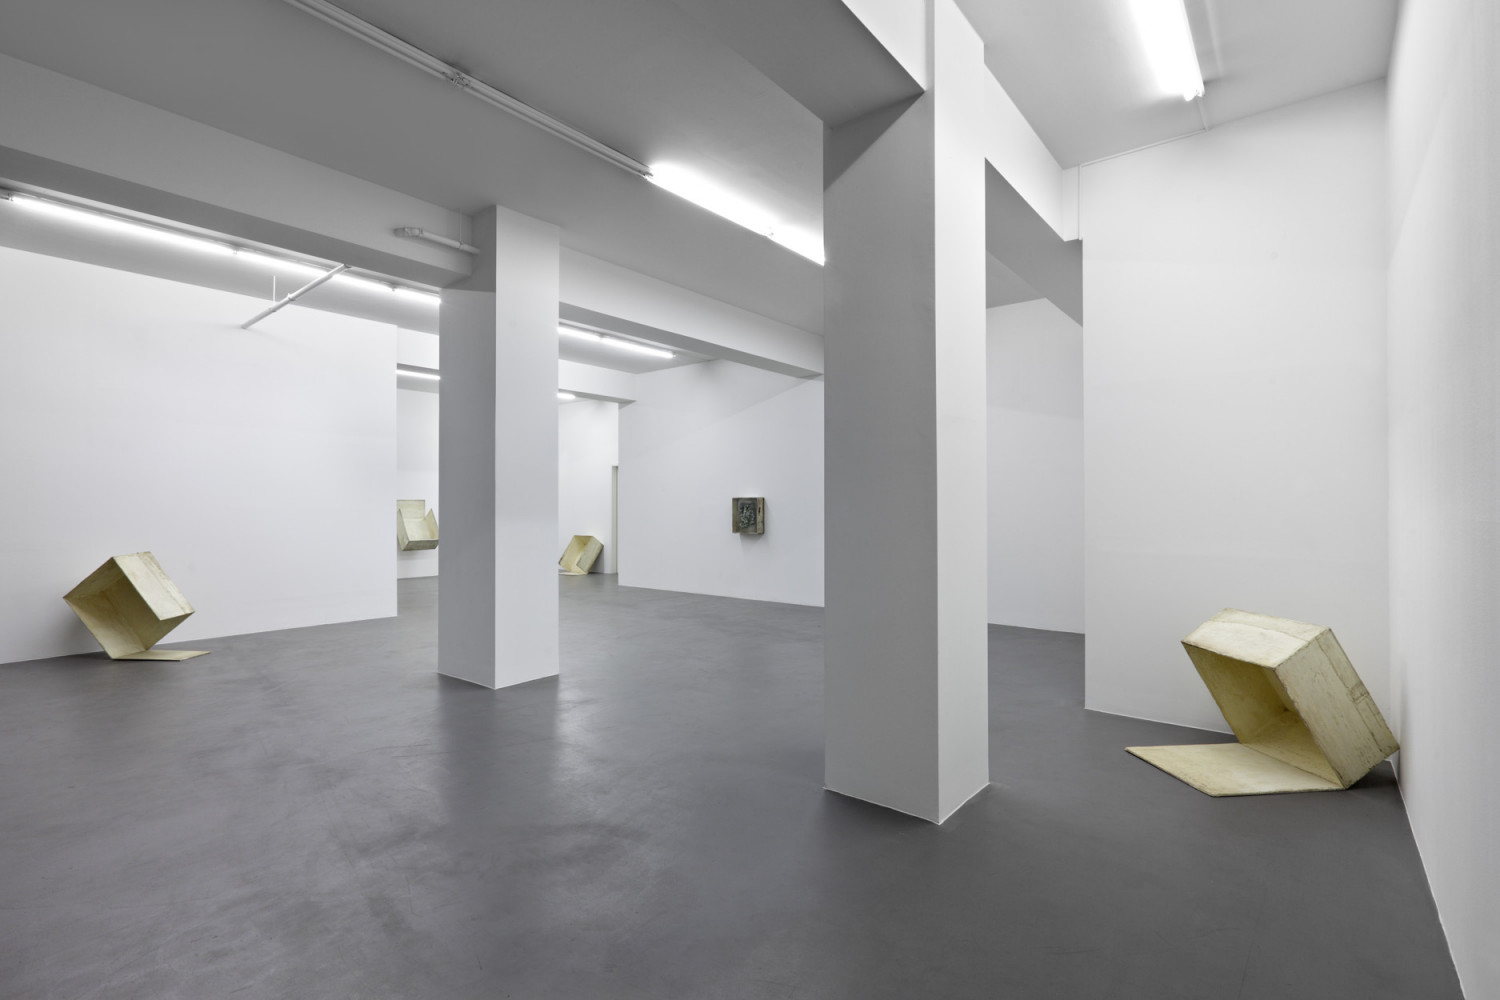 Lawrence Carroll, Installation view, Buchmann Galerie